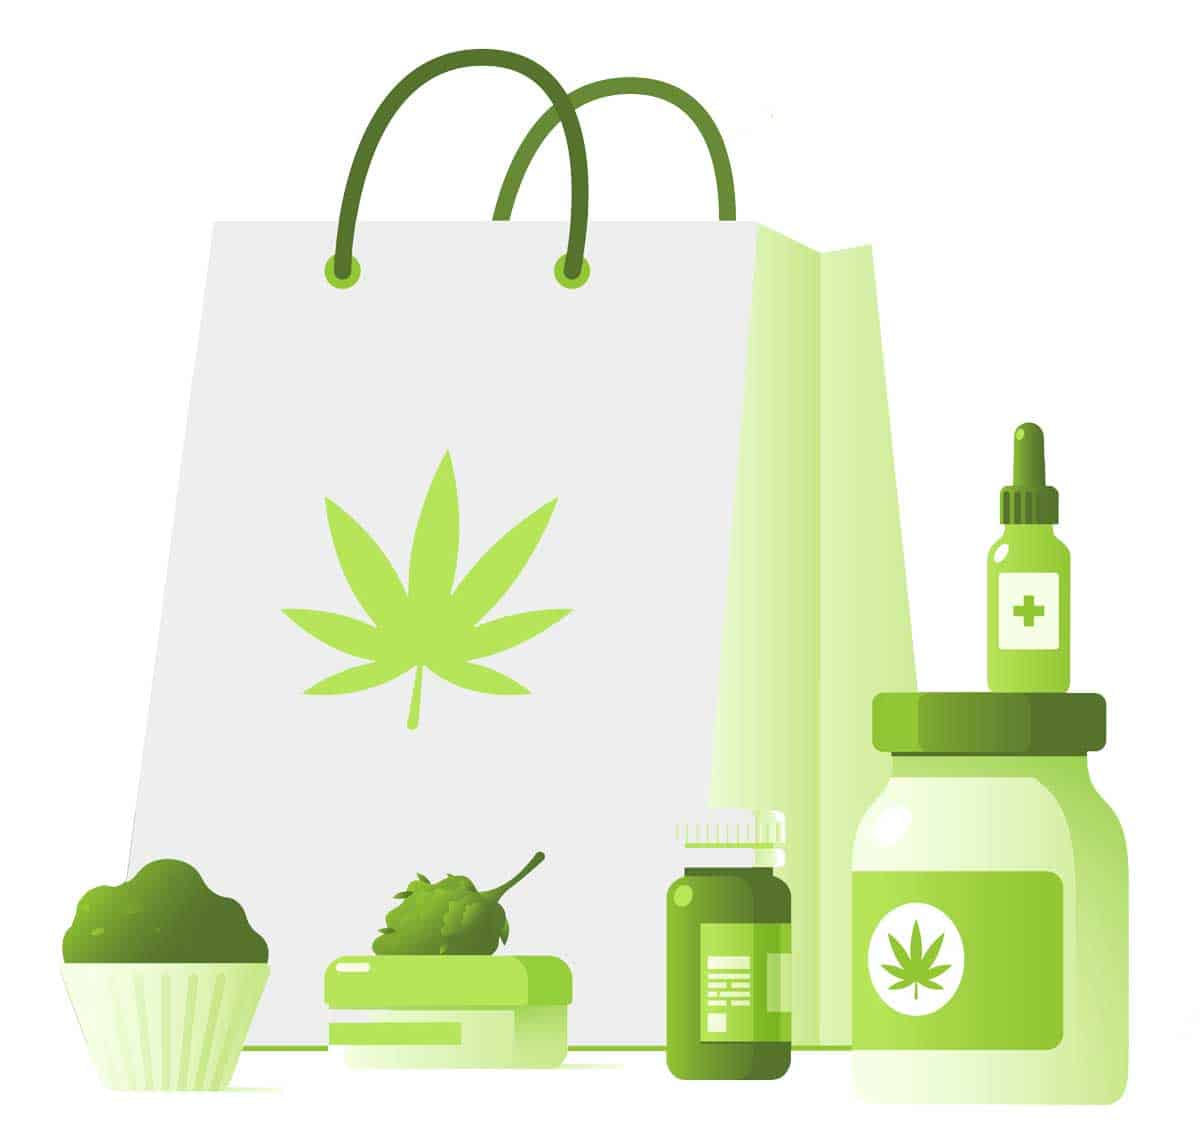 D Luxe Cannabis Customer Service 1